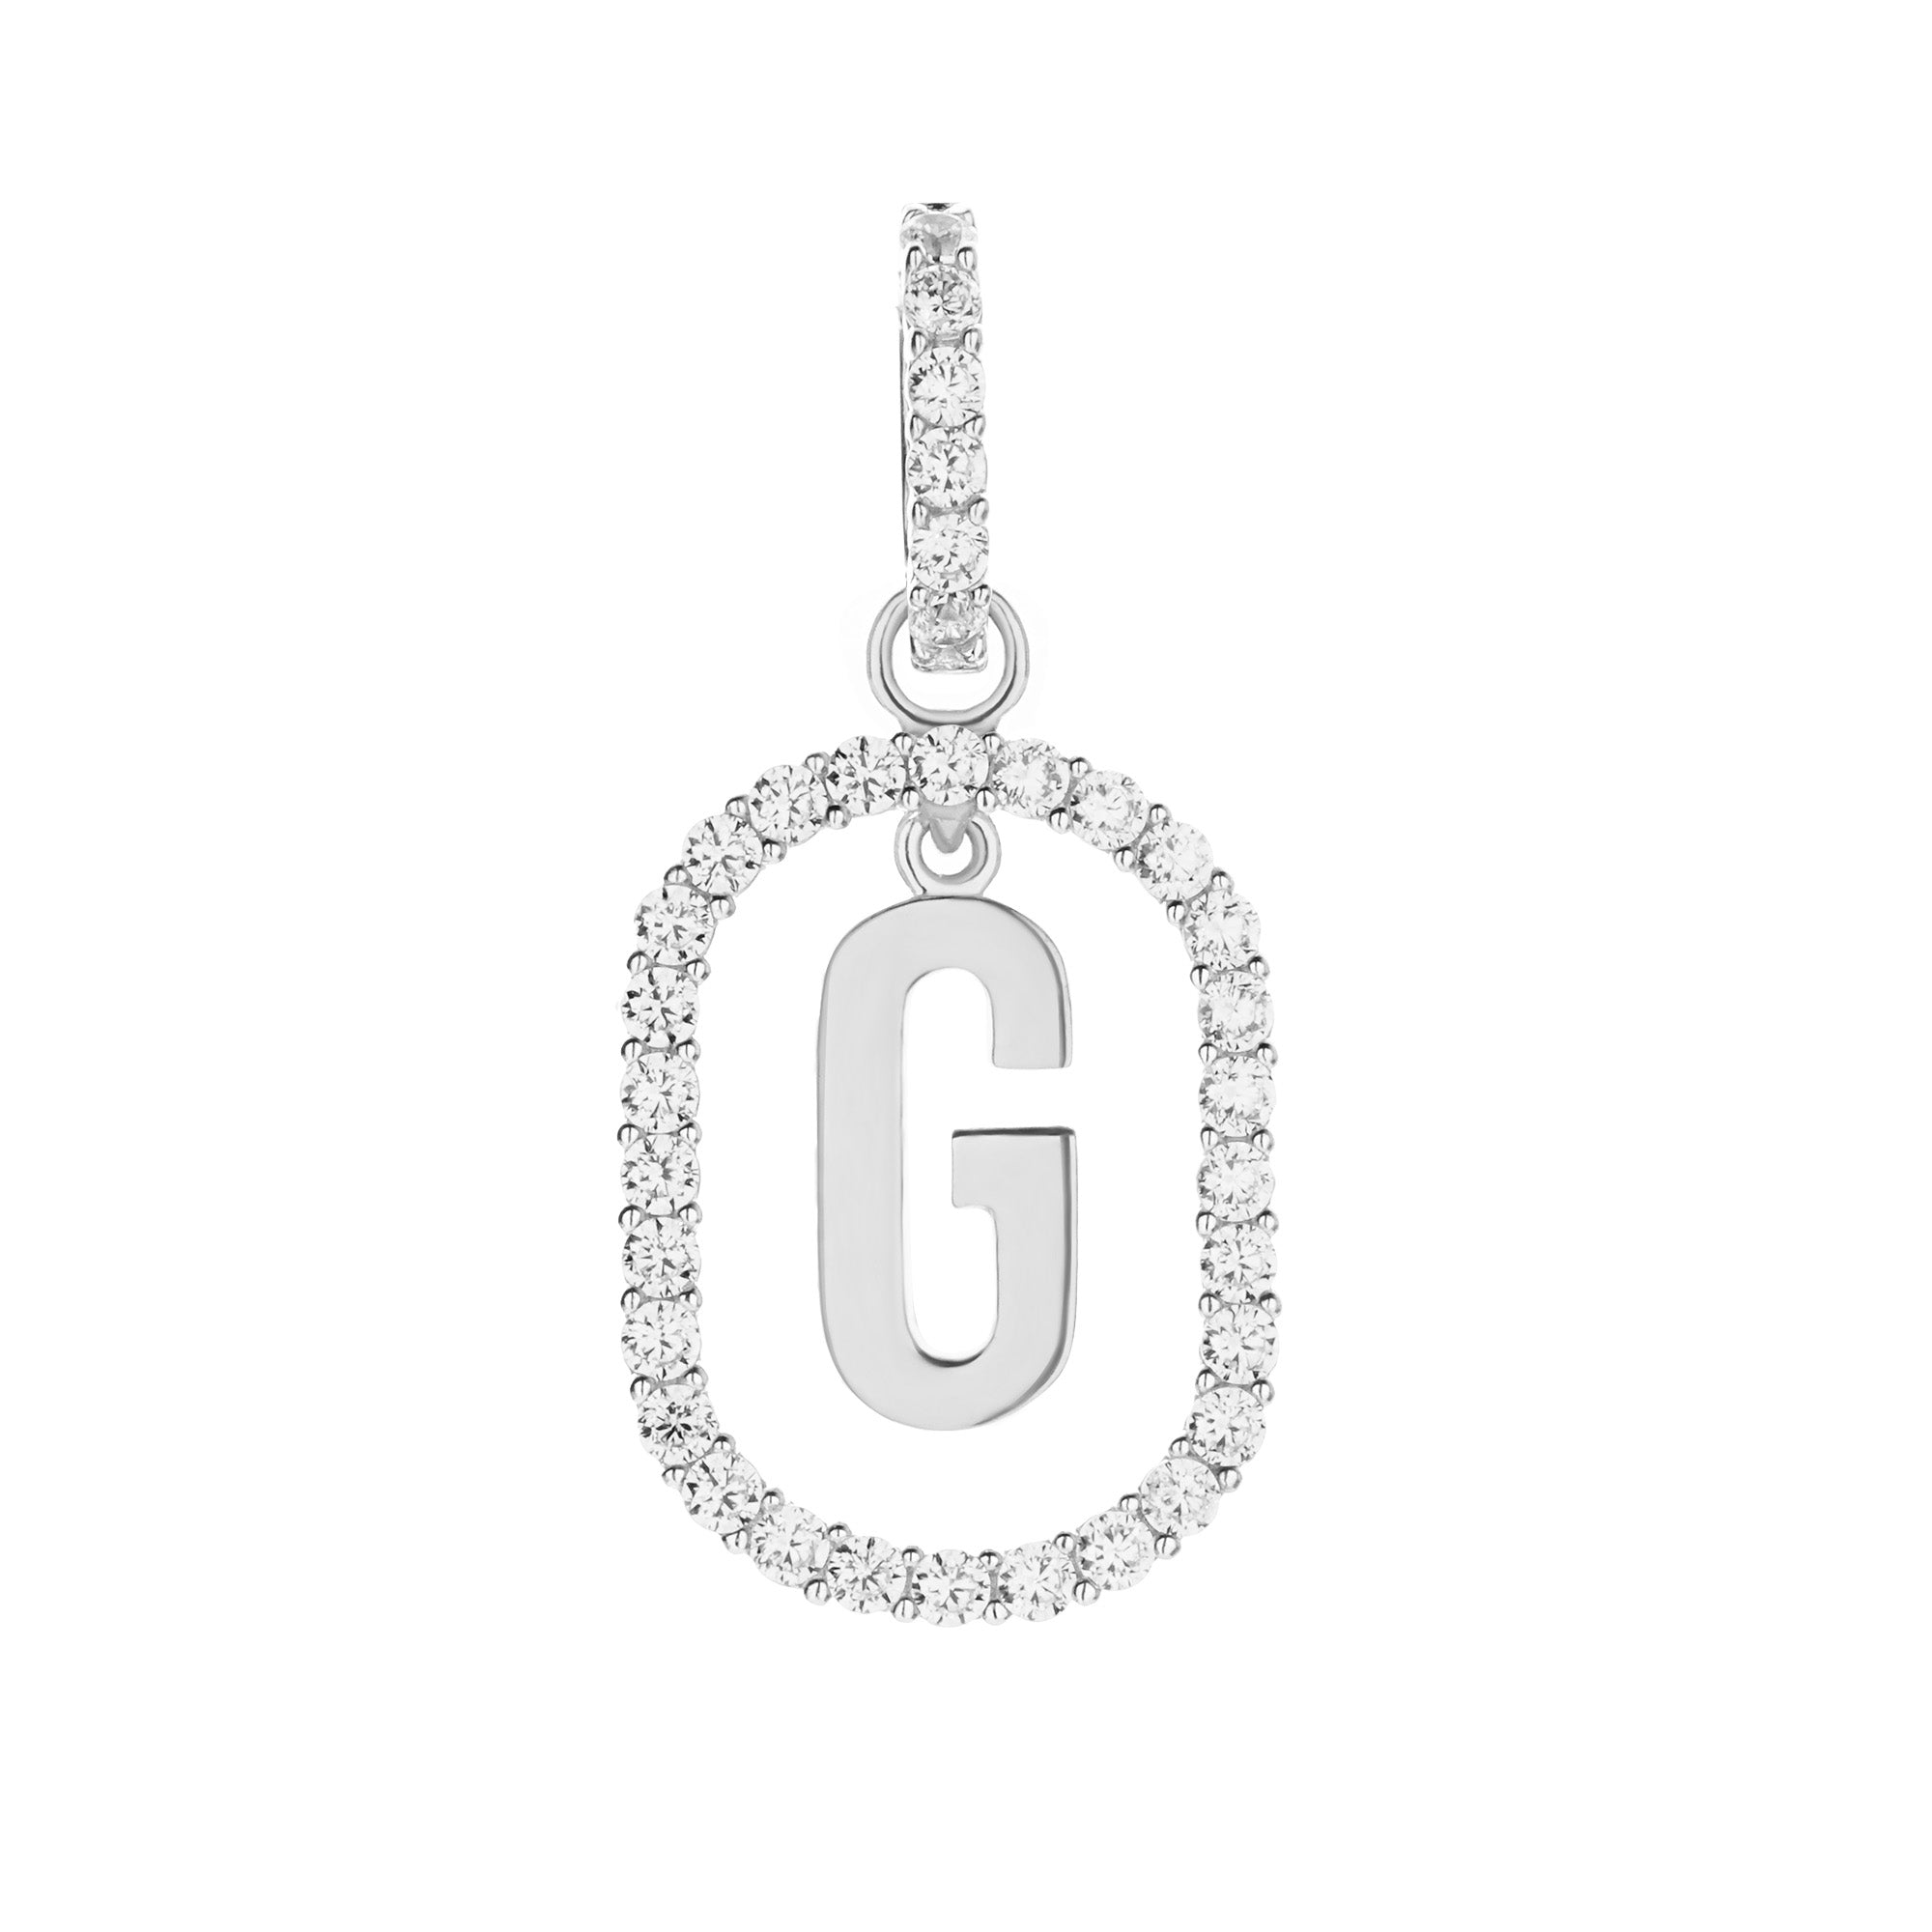 Aerin G Gold Pendant - Initial Pendant - Juene Jewelry